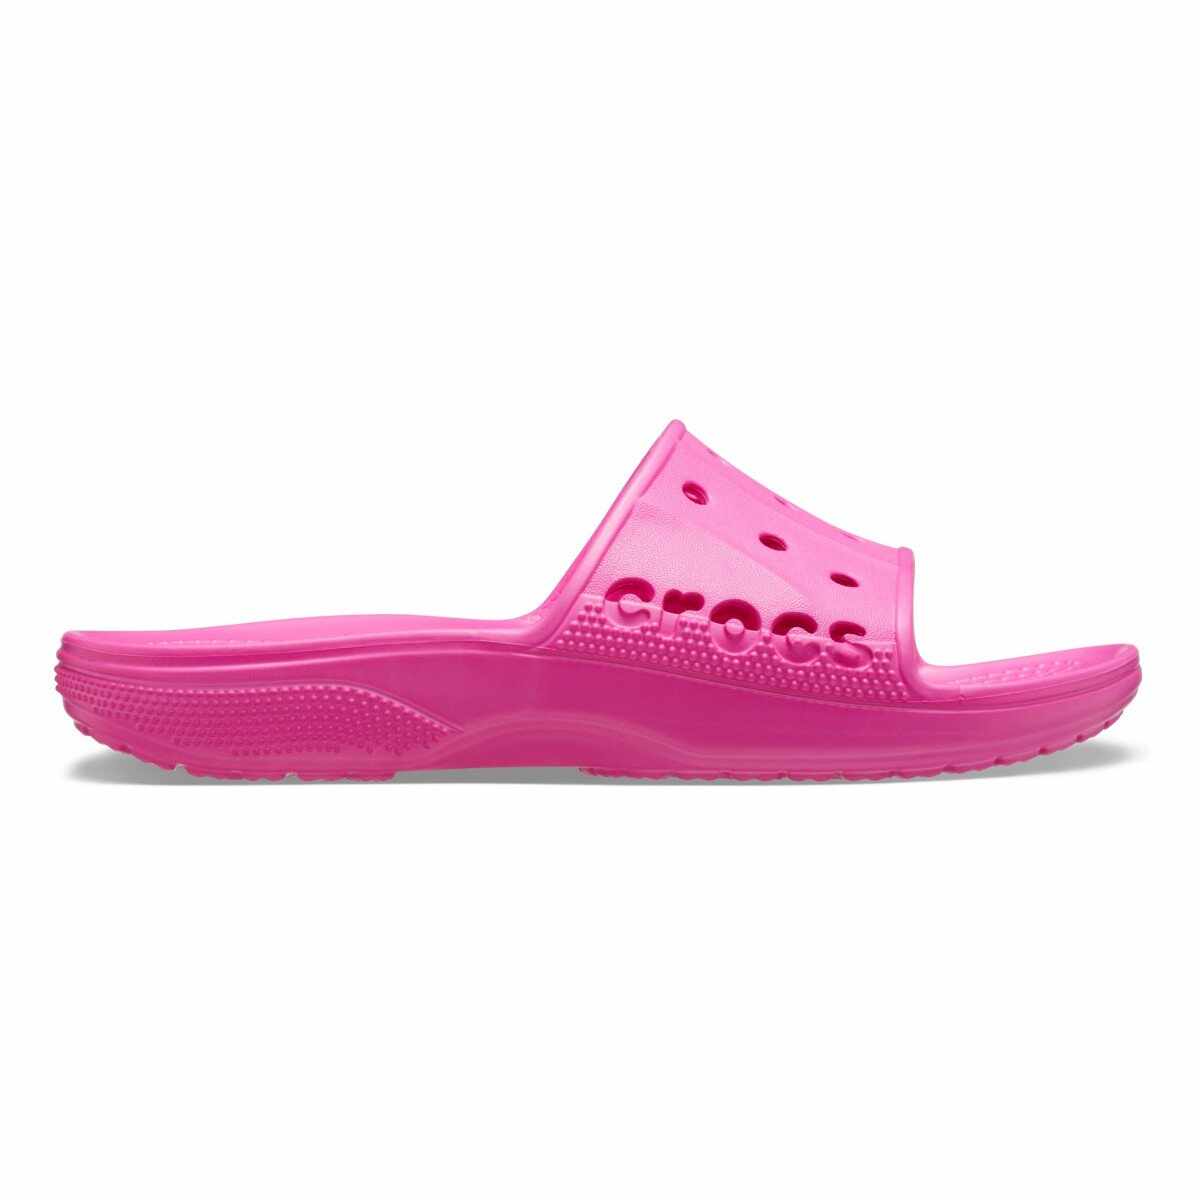 Papuci Crocs Baya II Slide Roz - Electric Pink